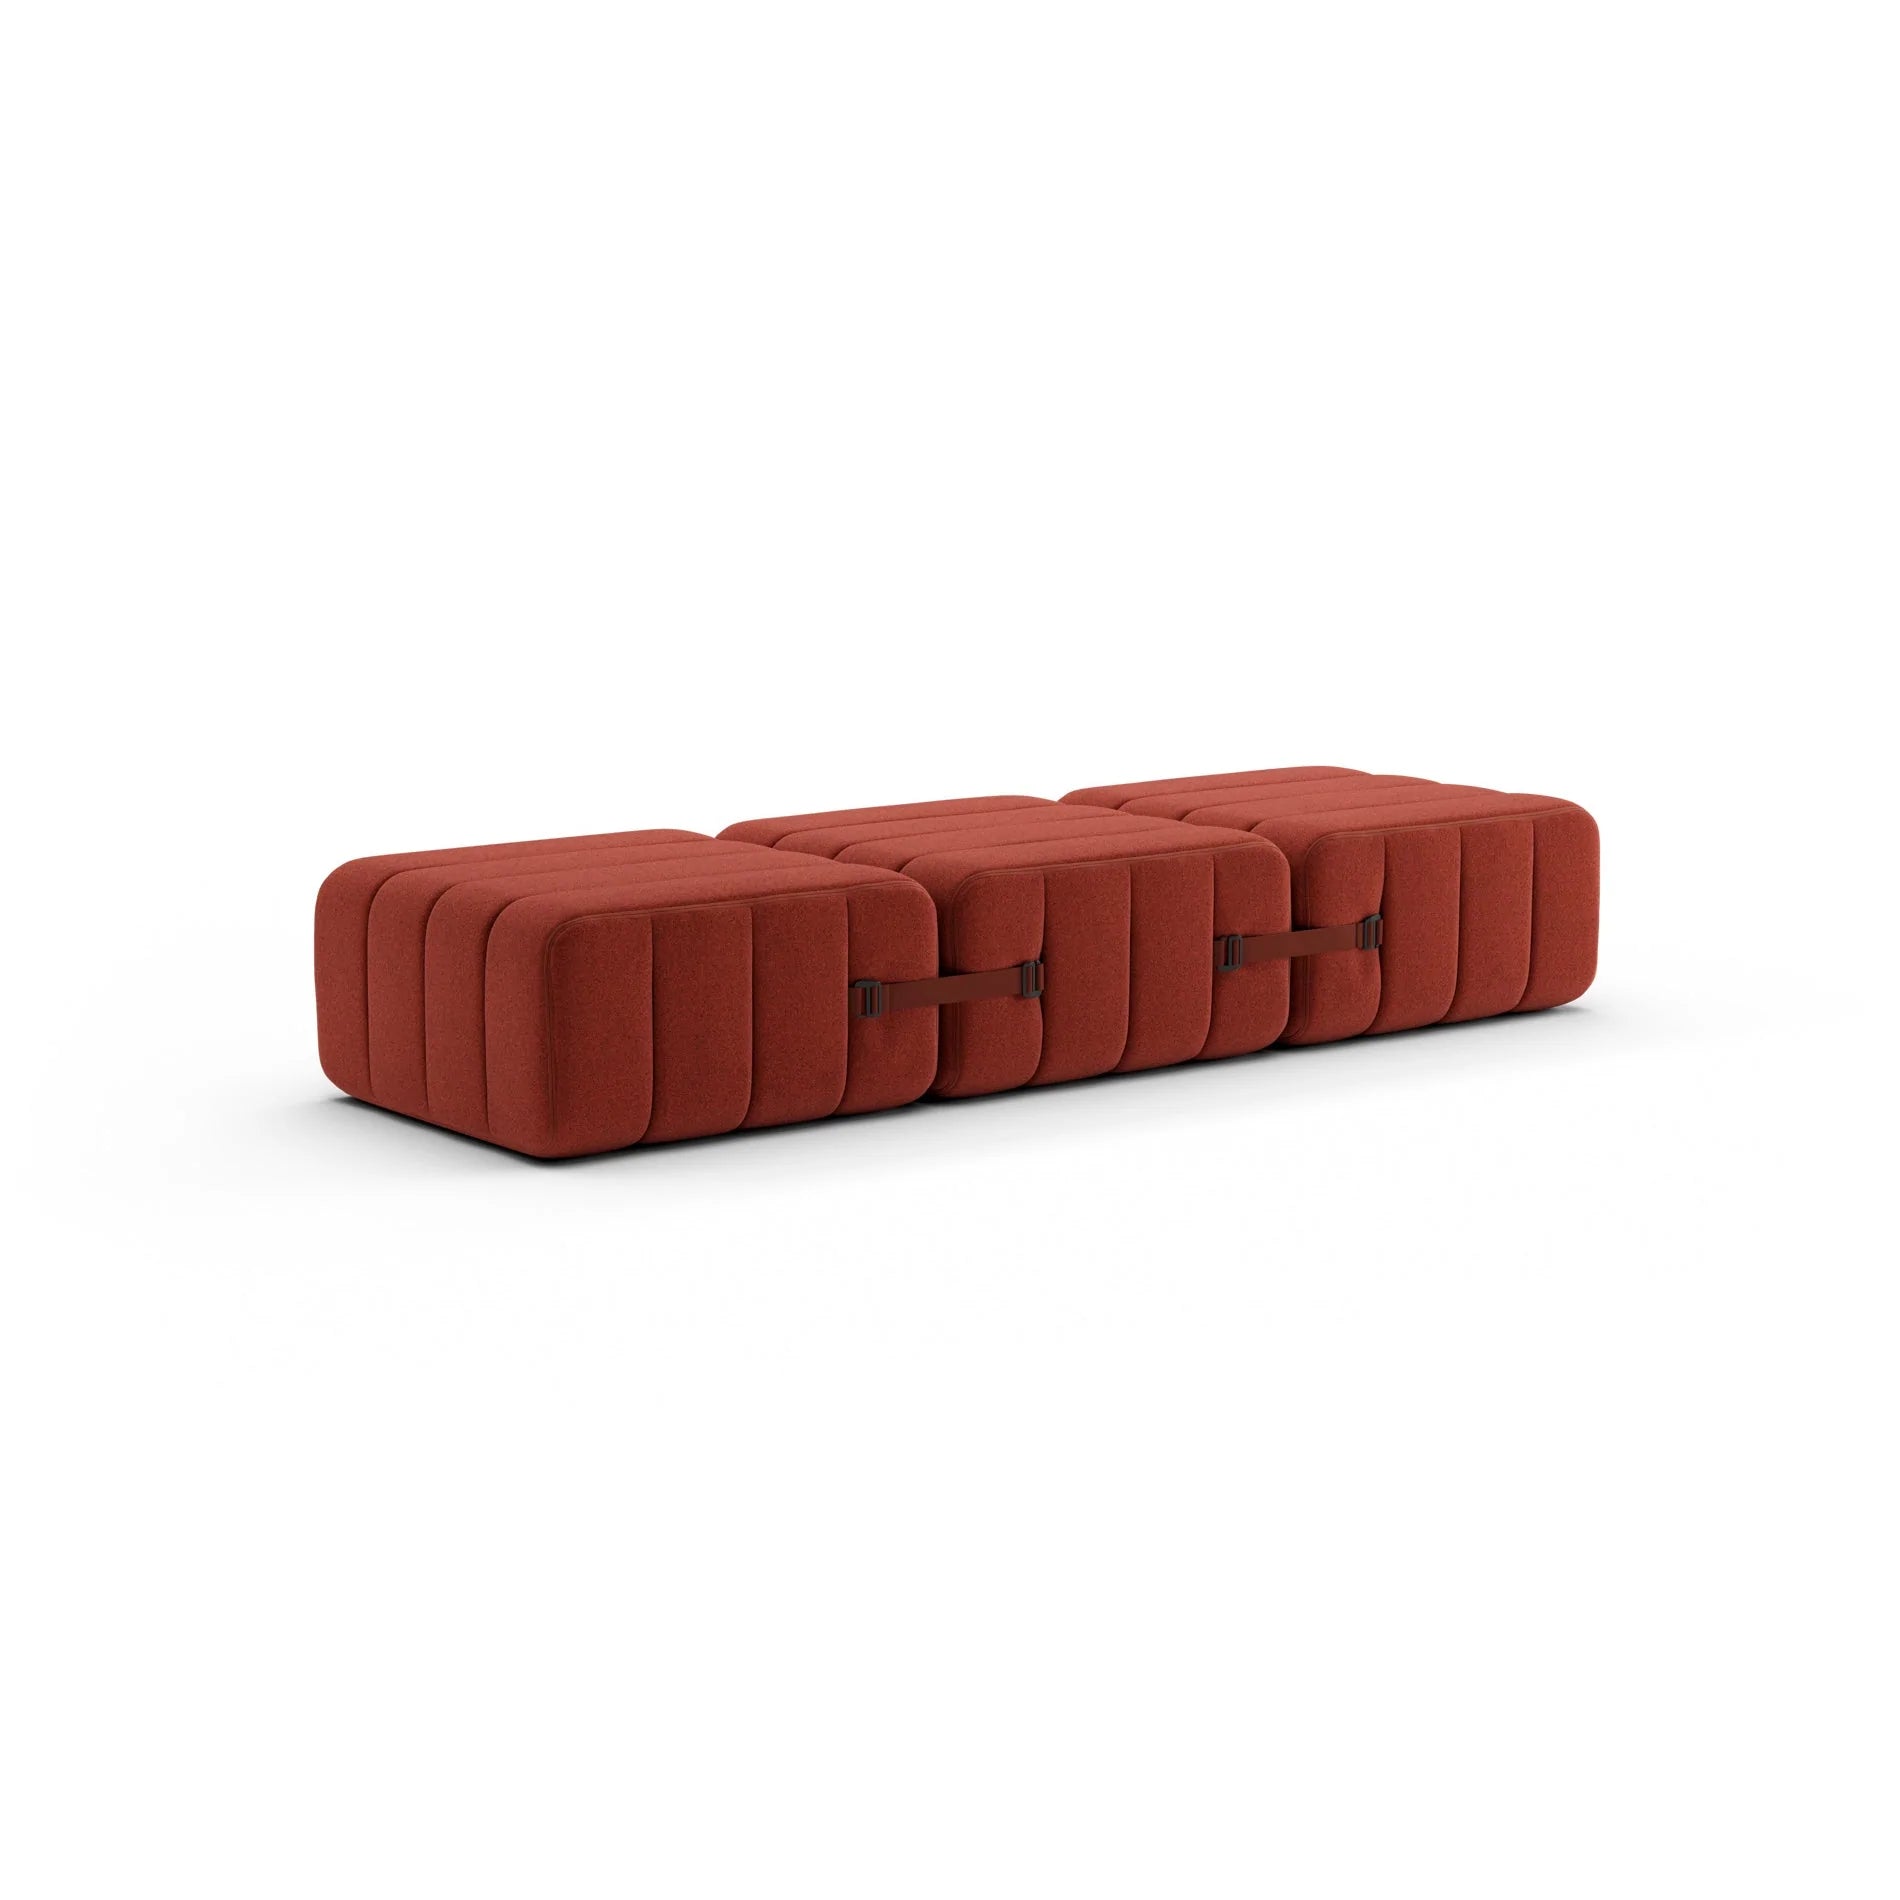 Modulares Sofa-System Curt - Dama Rot